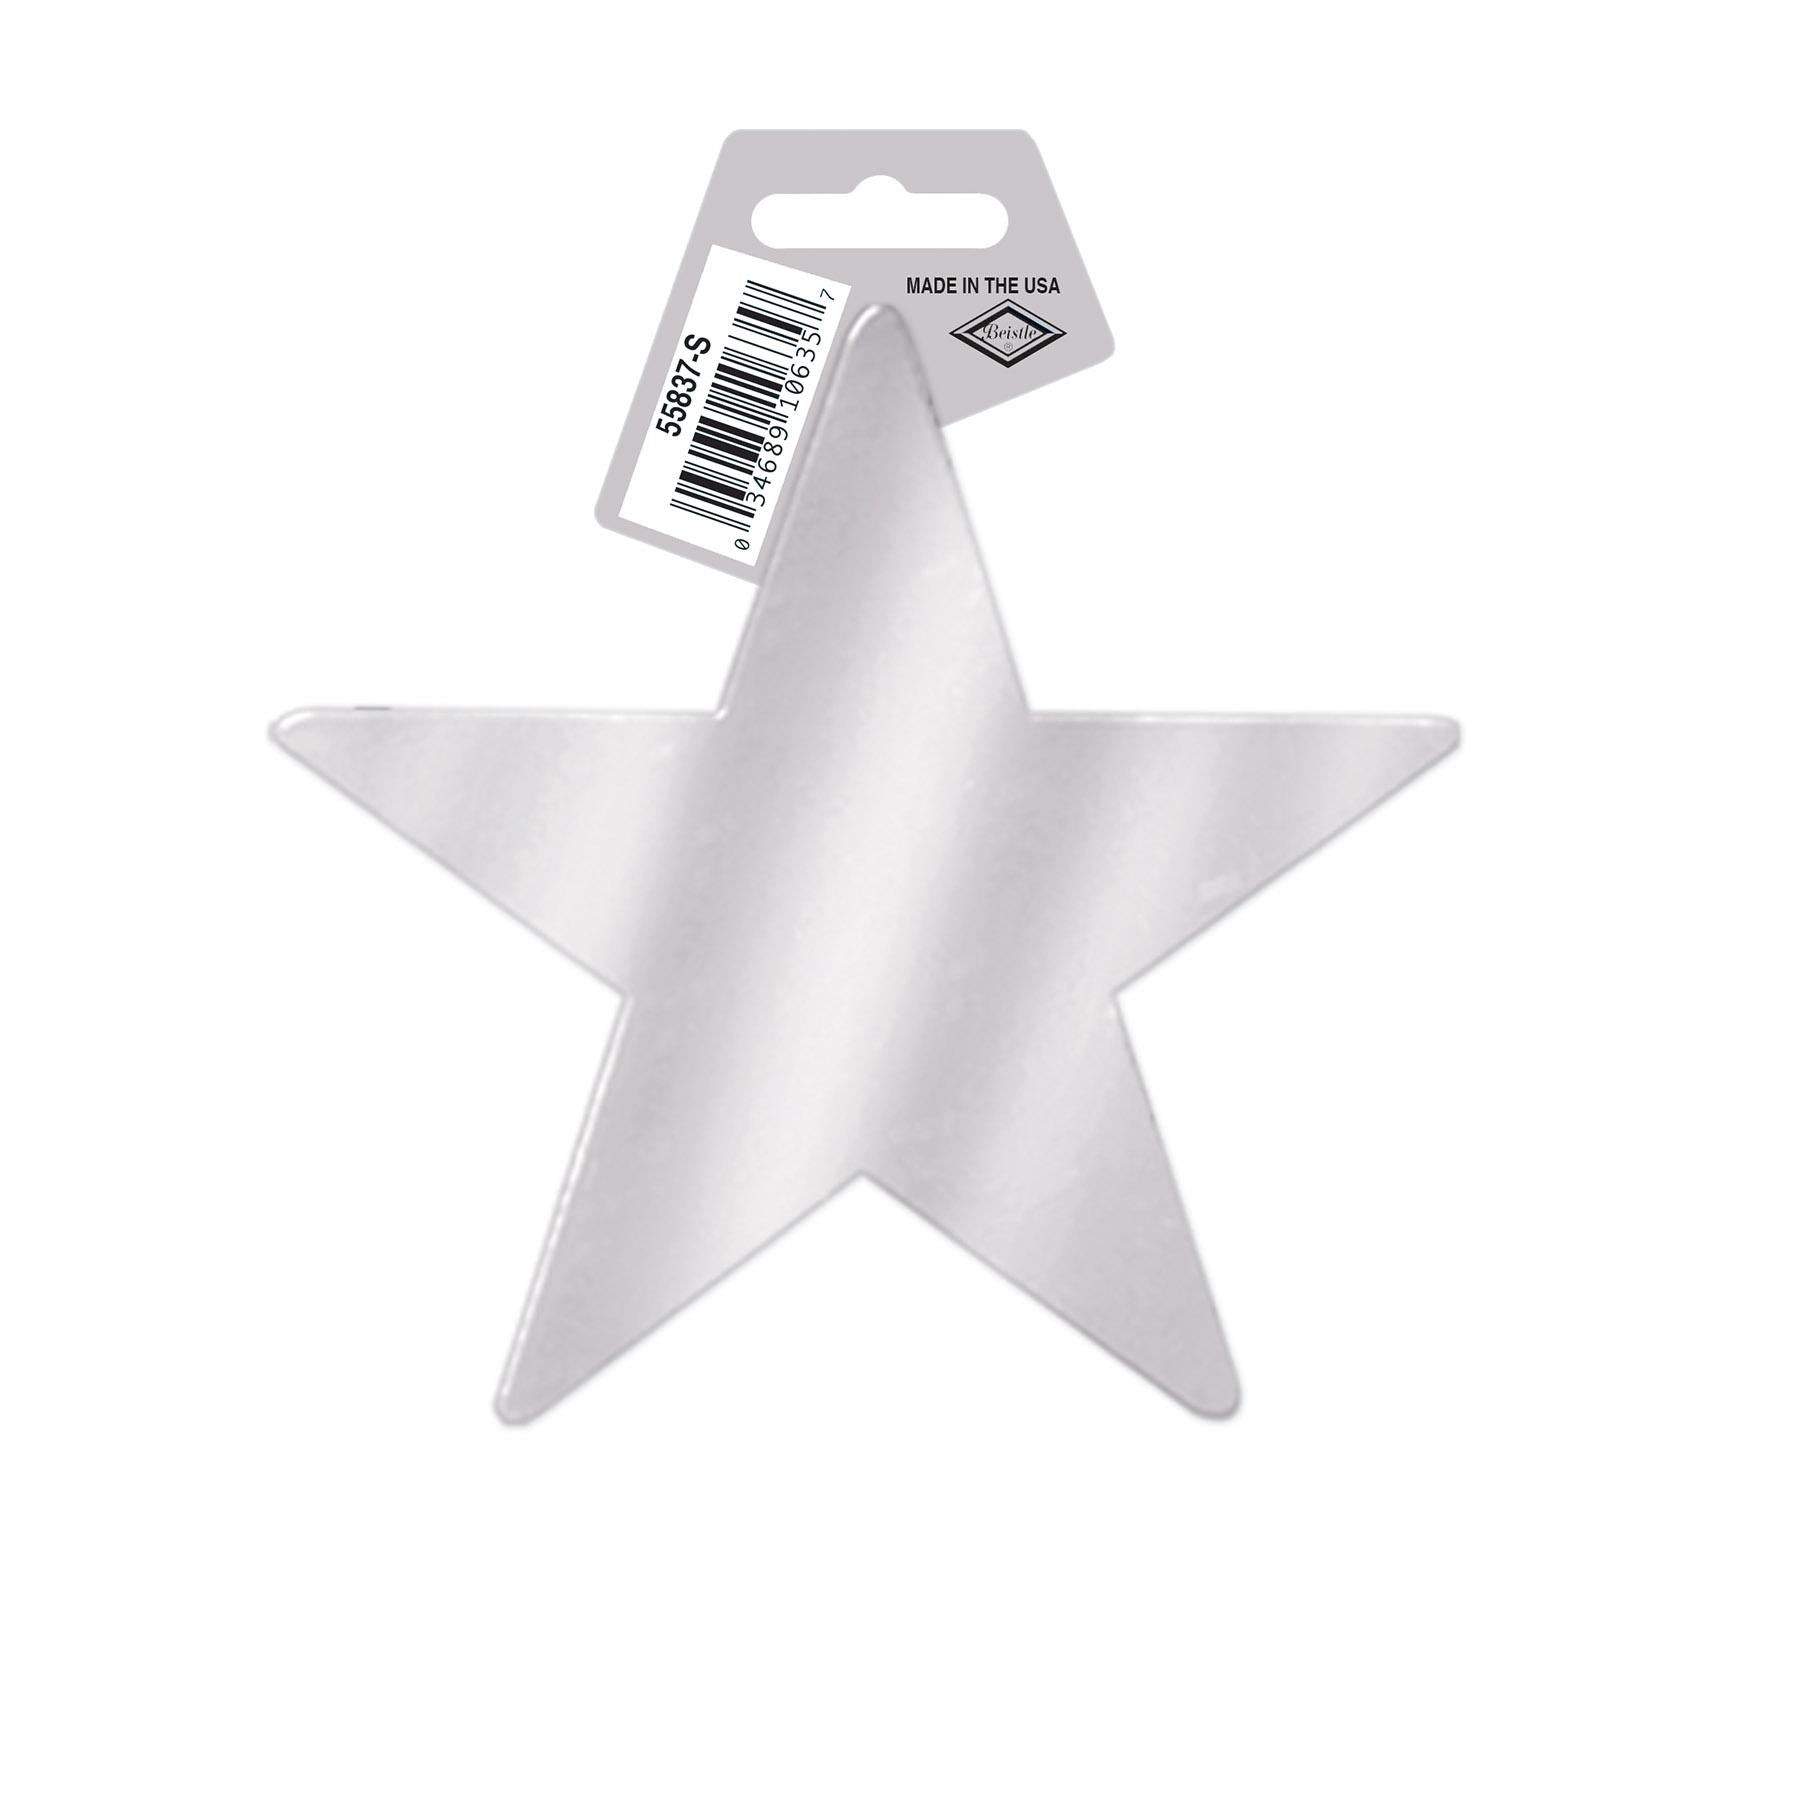 5" Beistle Foil Star Cutout - Silver